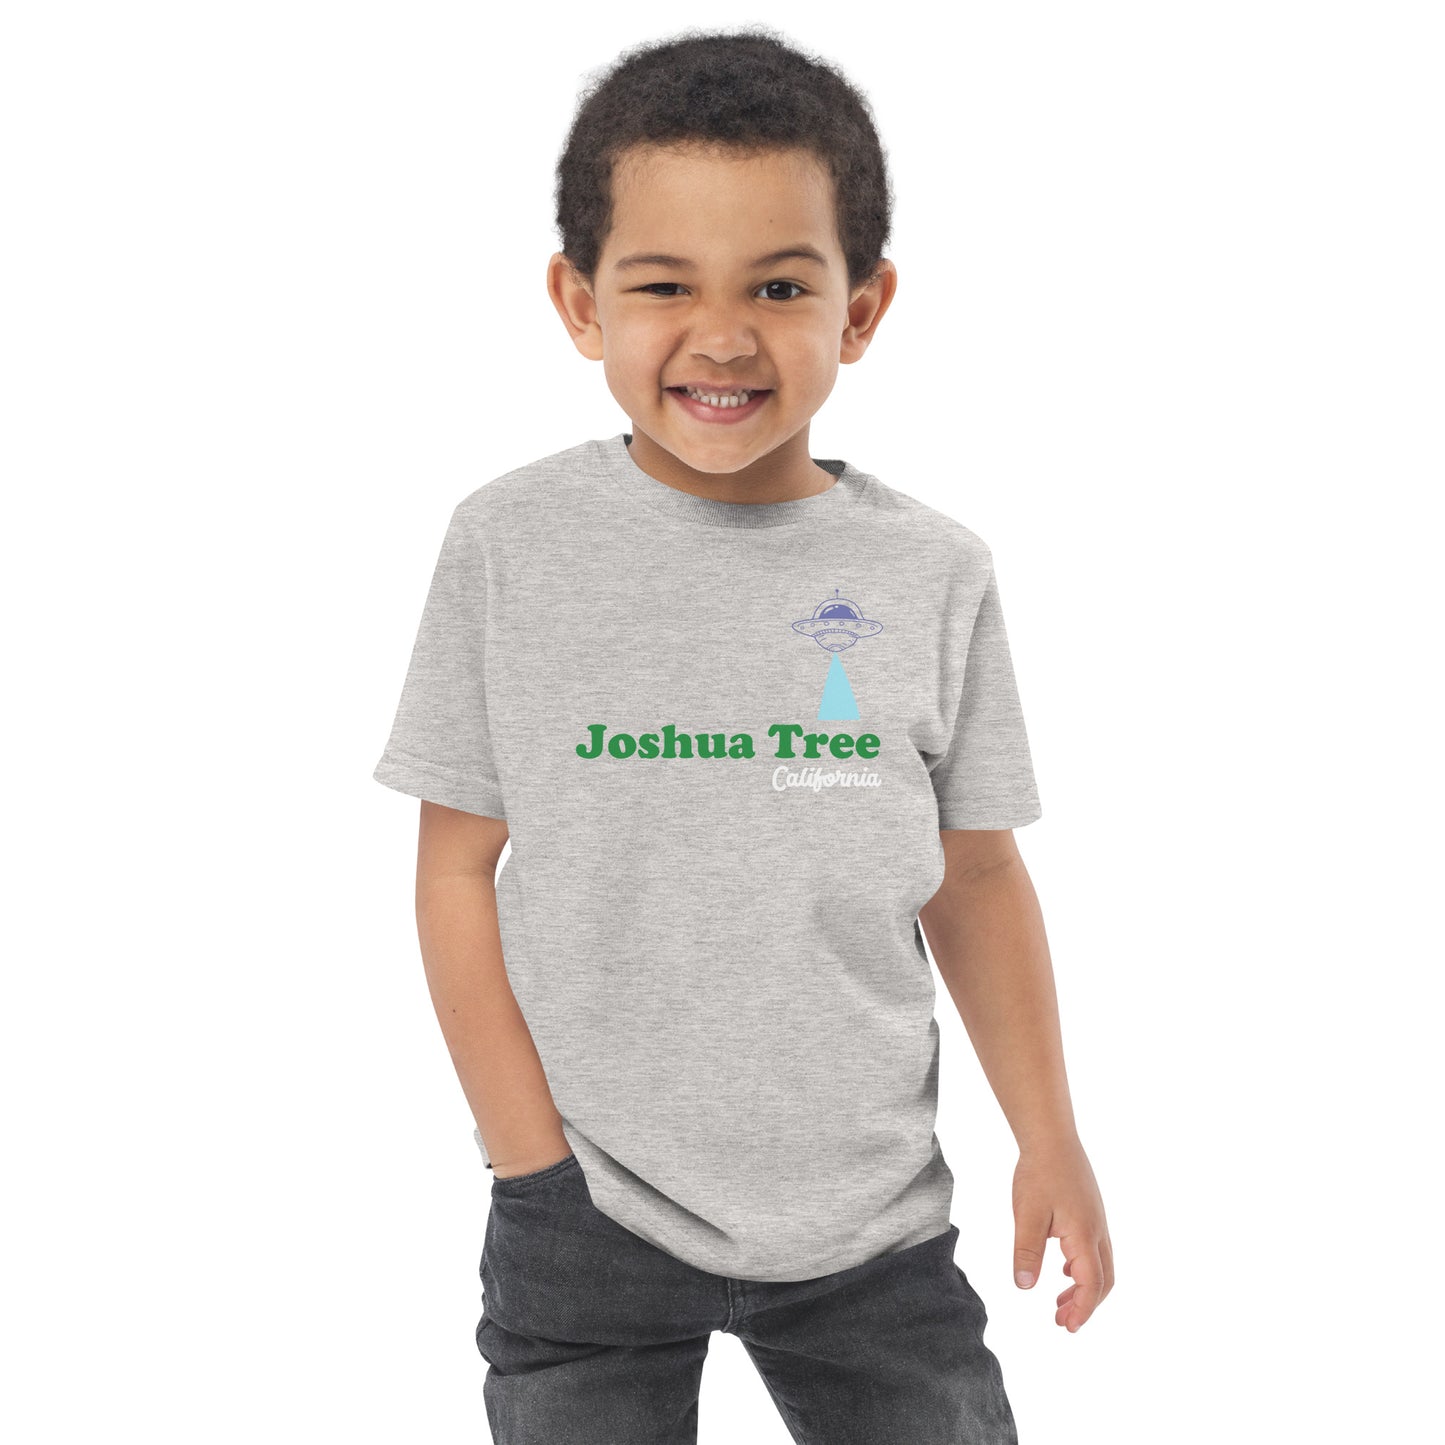 Joshua Tree Toddler Tee